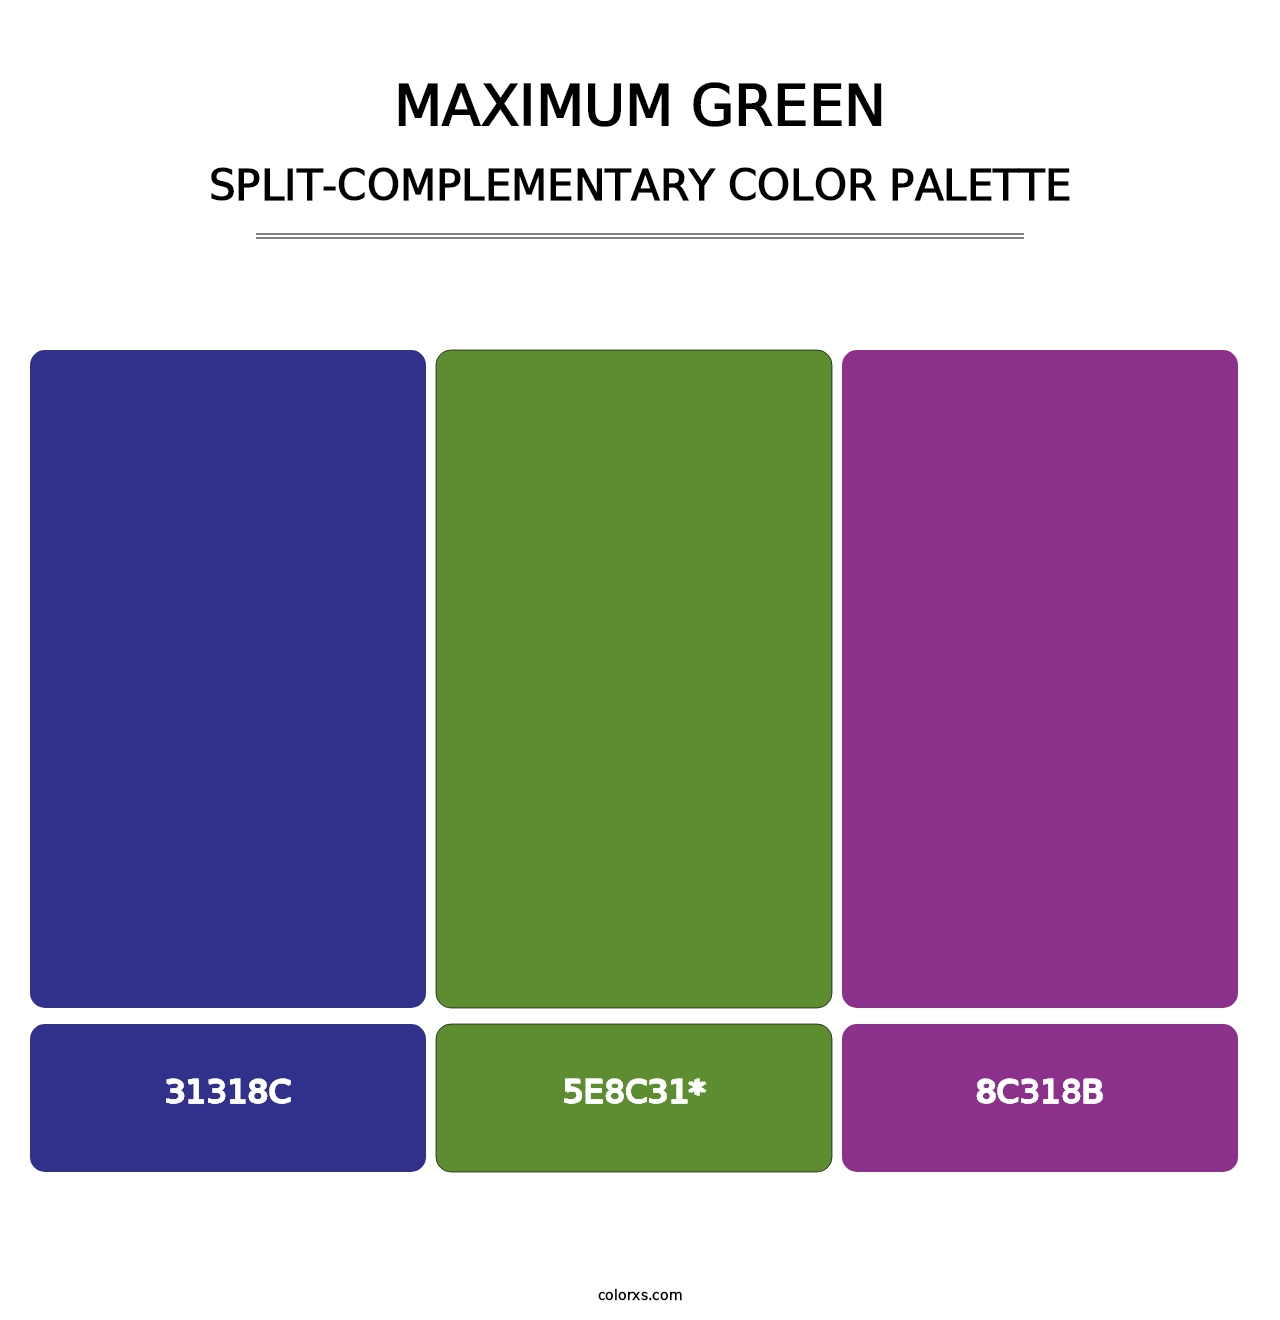 Maximum Green - Split-Complementary Color Palette